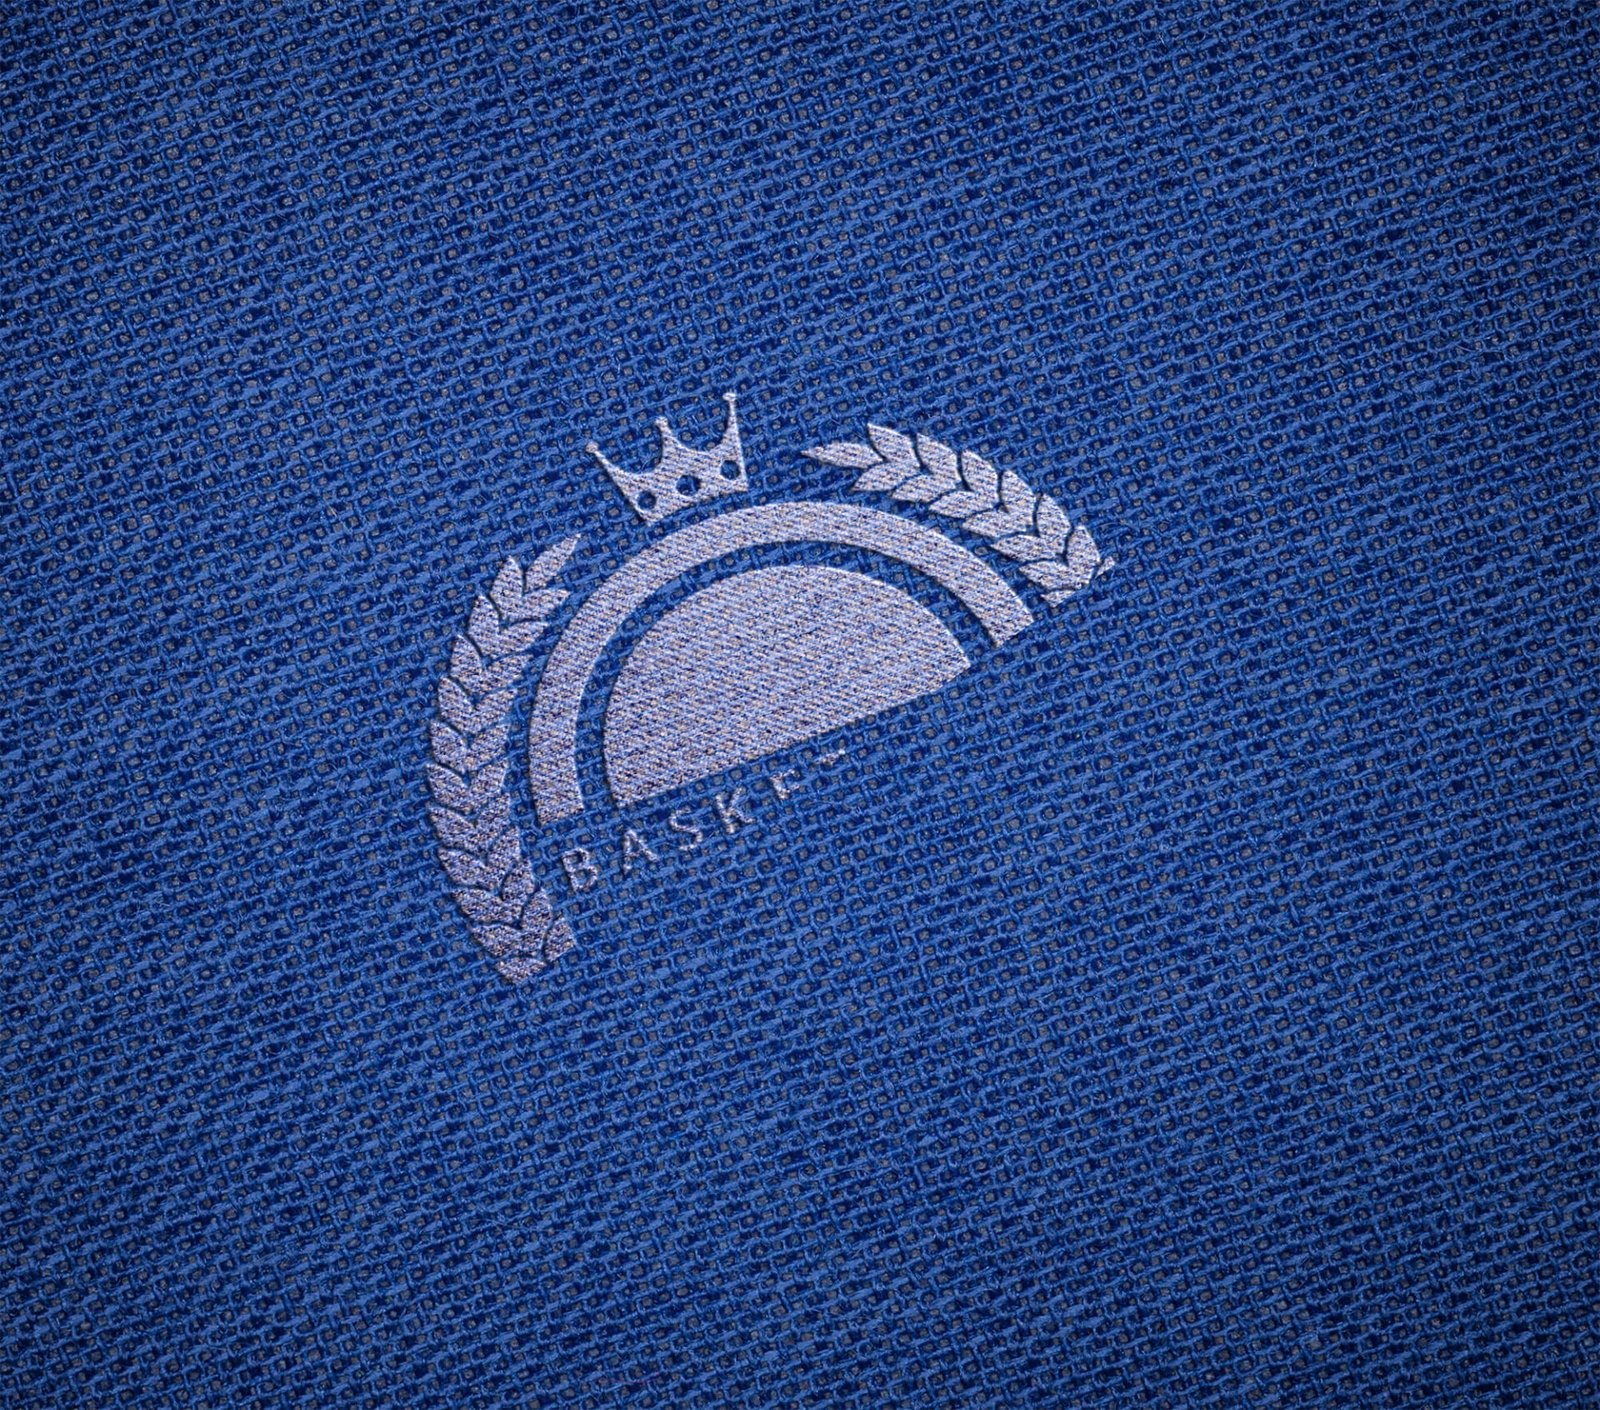 Download Free Embroidered Logo Mockup Vol 2 PSD Template - Mockupden